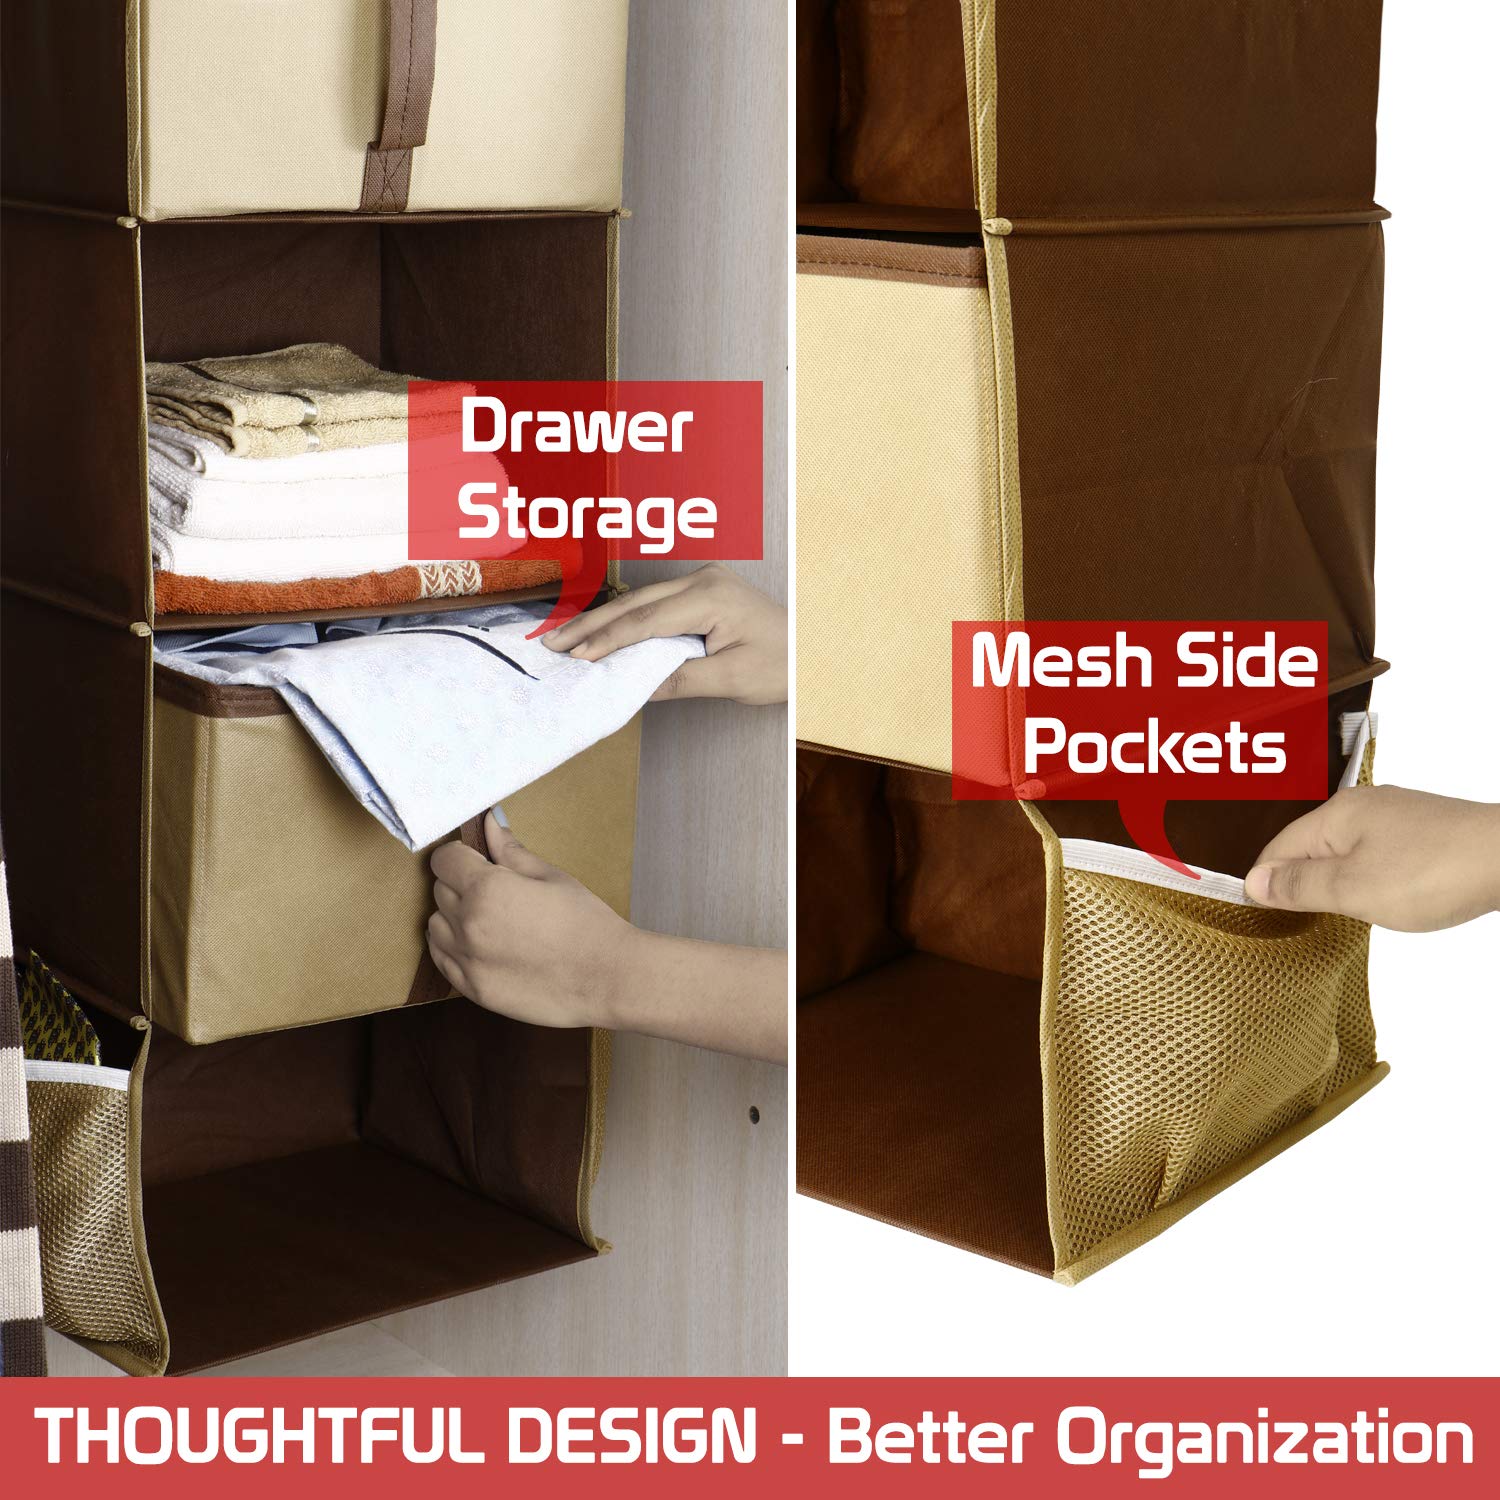 UrbanStorie® 4 Pocket Shelf Hanging Organizer for Wardrobe with Storage Drawers